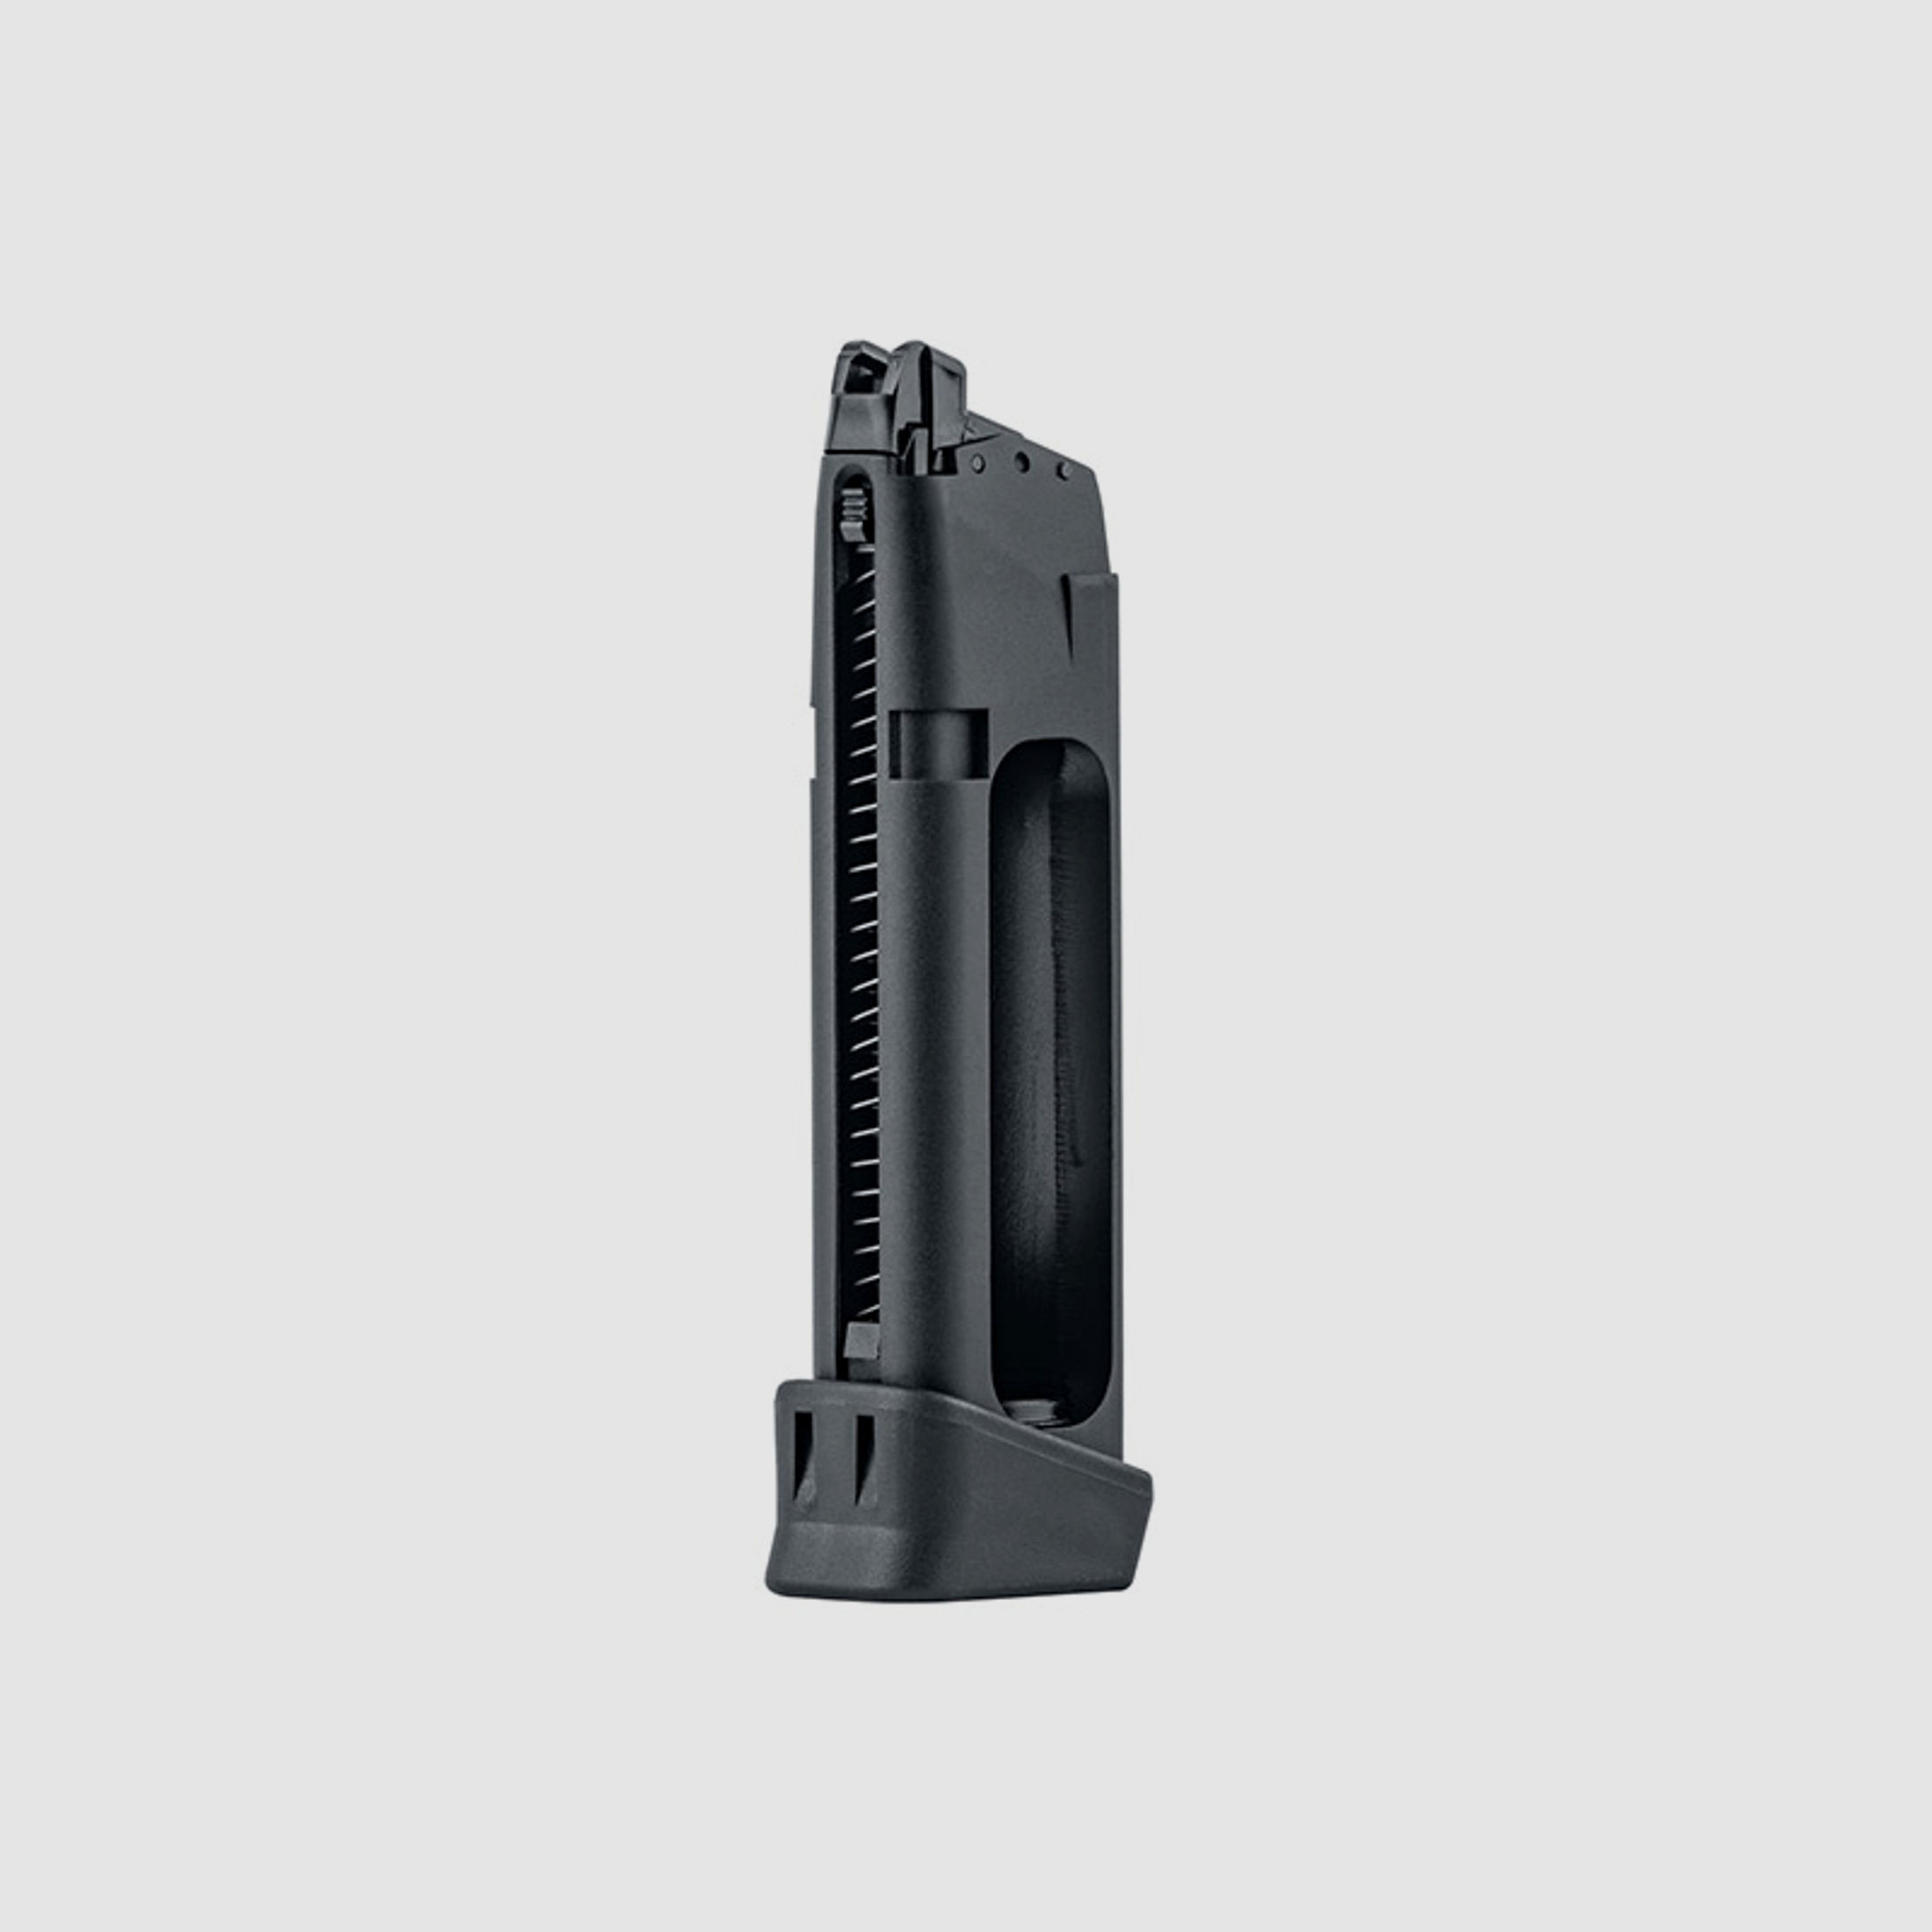 Ersatzmagazin fĂĽr Softair CO2 Pistole Glock 17 Gen4 Kaliber 6 mm BB 25 Schuss